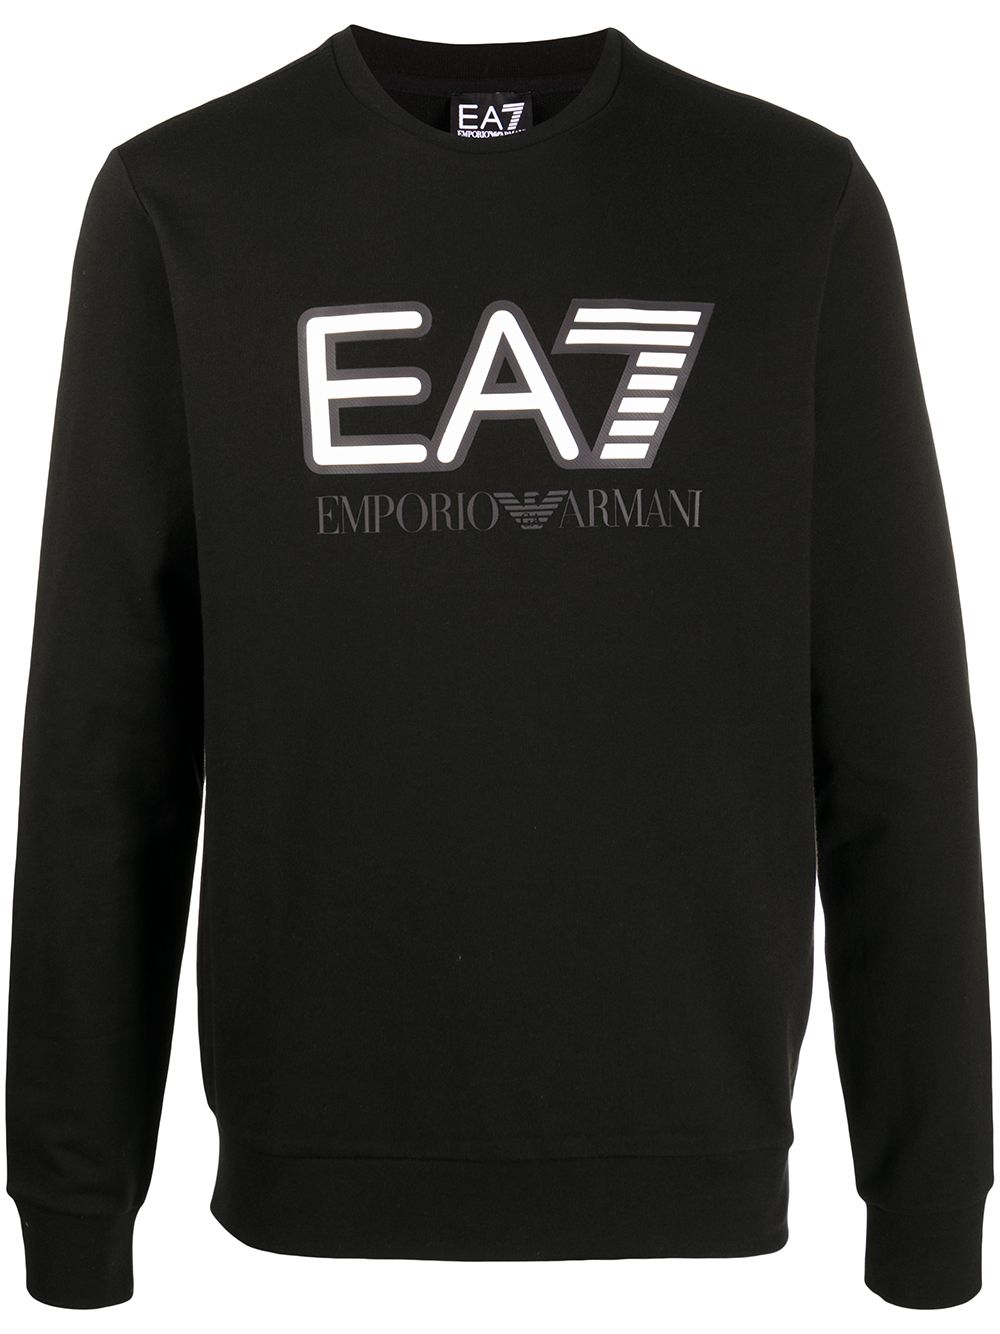 ea7 crew neck sweatshirt